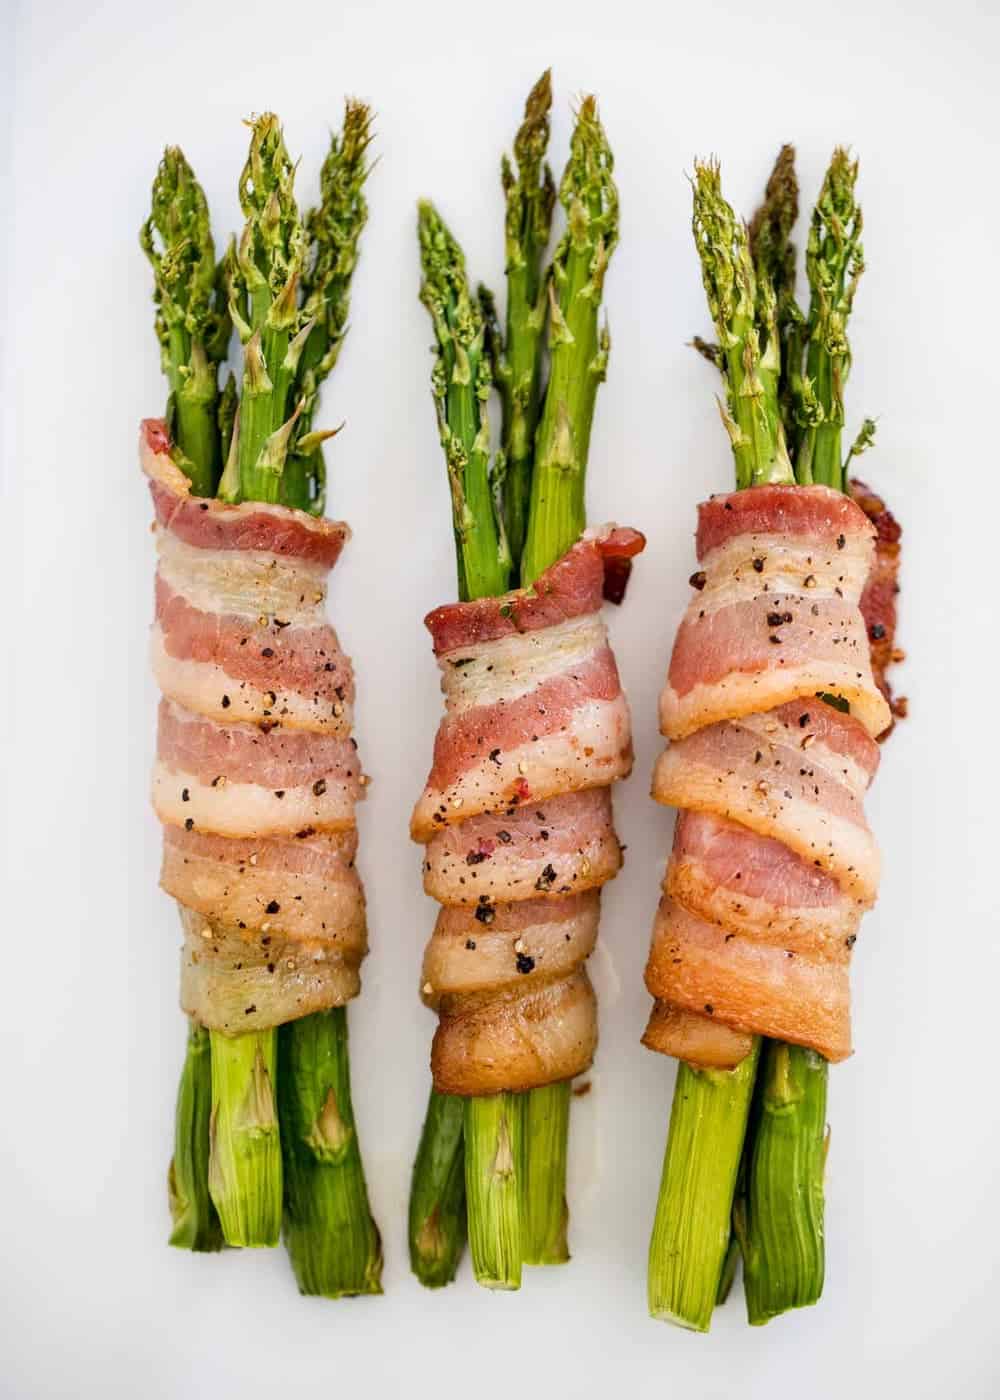 Bacon wrapped asparagus bundles.